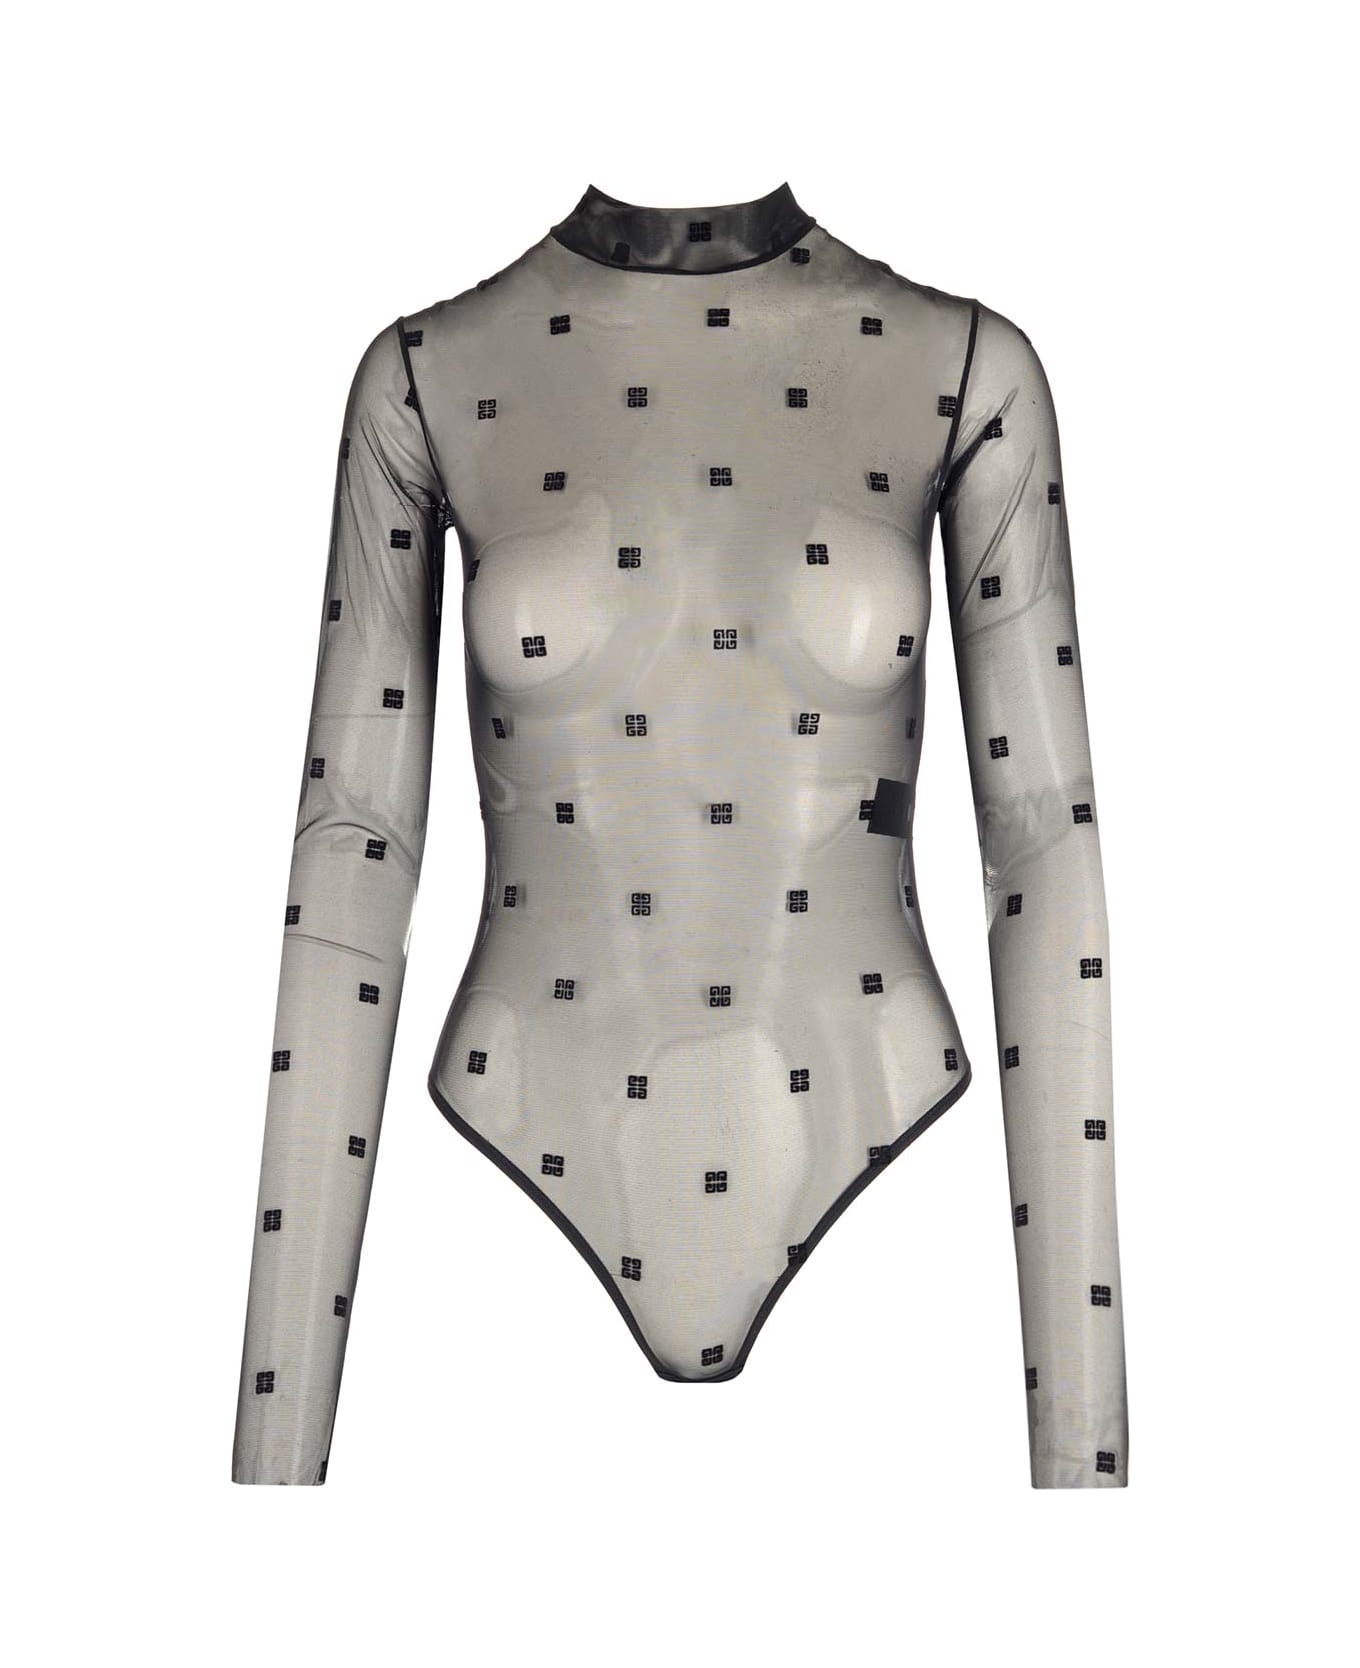 Givenchy Transparent Bodysuit "$g" Motif - Black